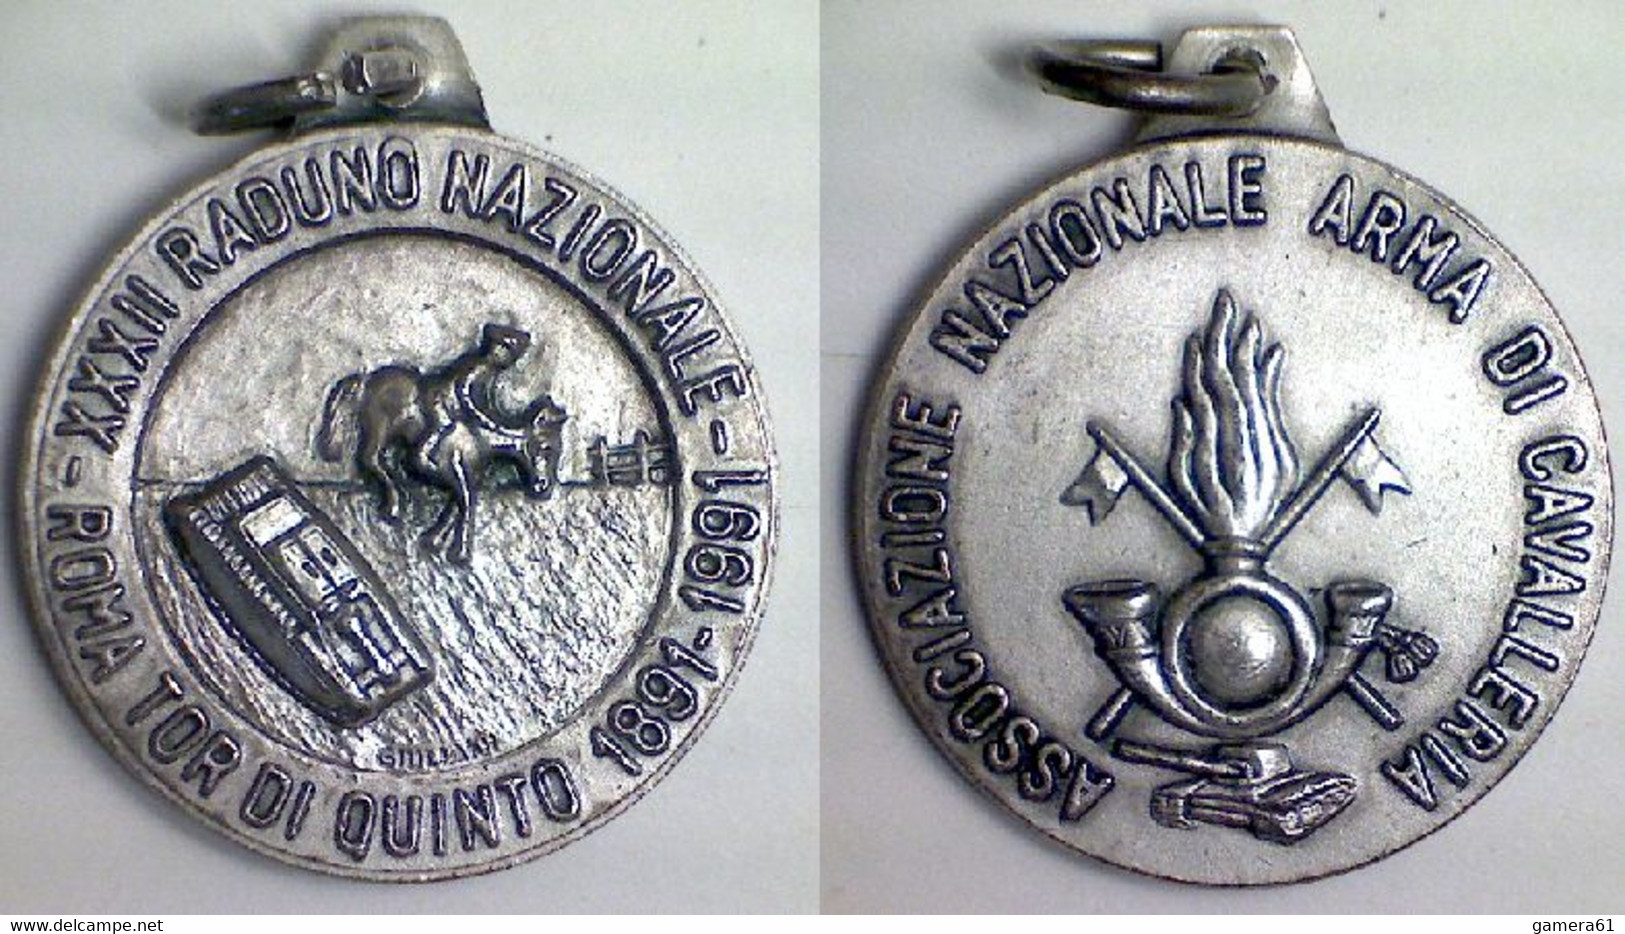 04446 MEDAGLIA ASSOCIAZIONE NAZIONALE ARMA DI CAVALLERIA XXXII RADUNO TOR DI QUINTO1891-1991 - Royal/Of Nobility